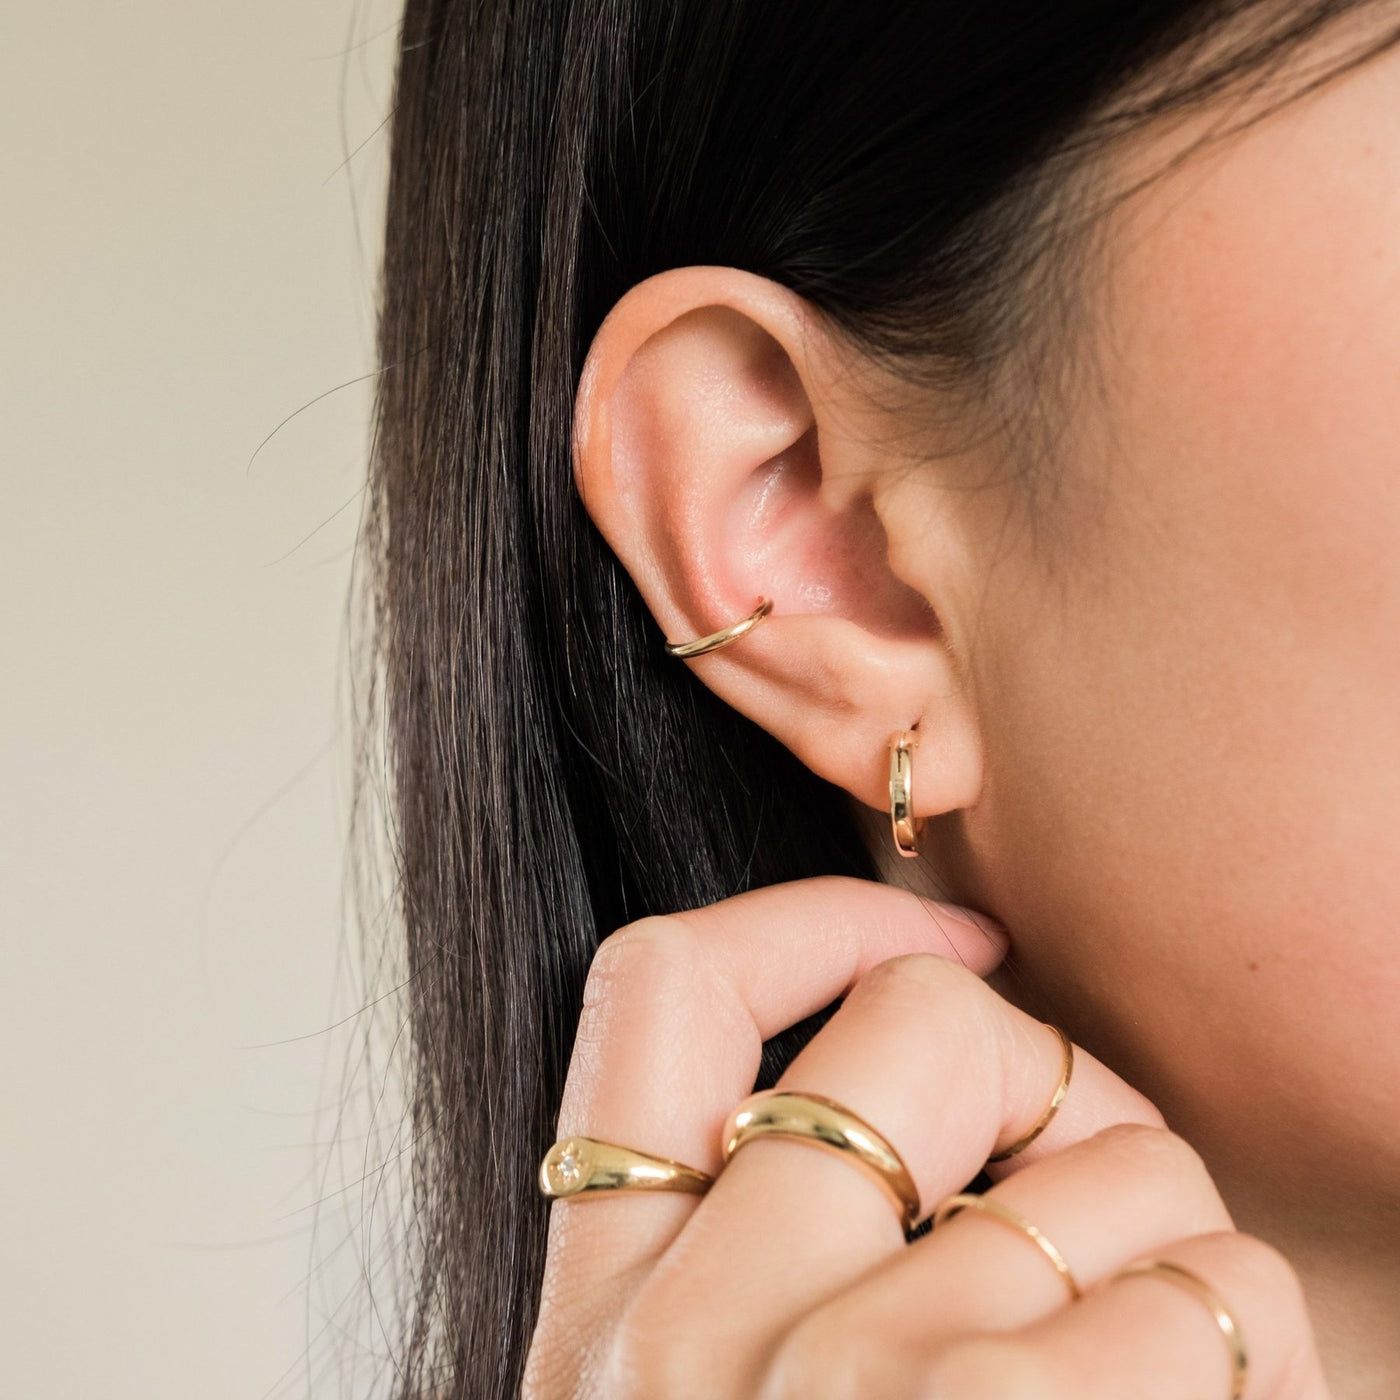 Dainty Ear Cuff by Simple & Dainty Jewelry